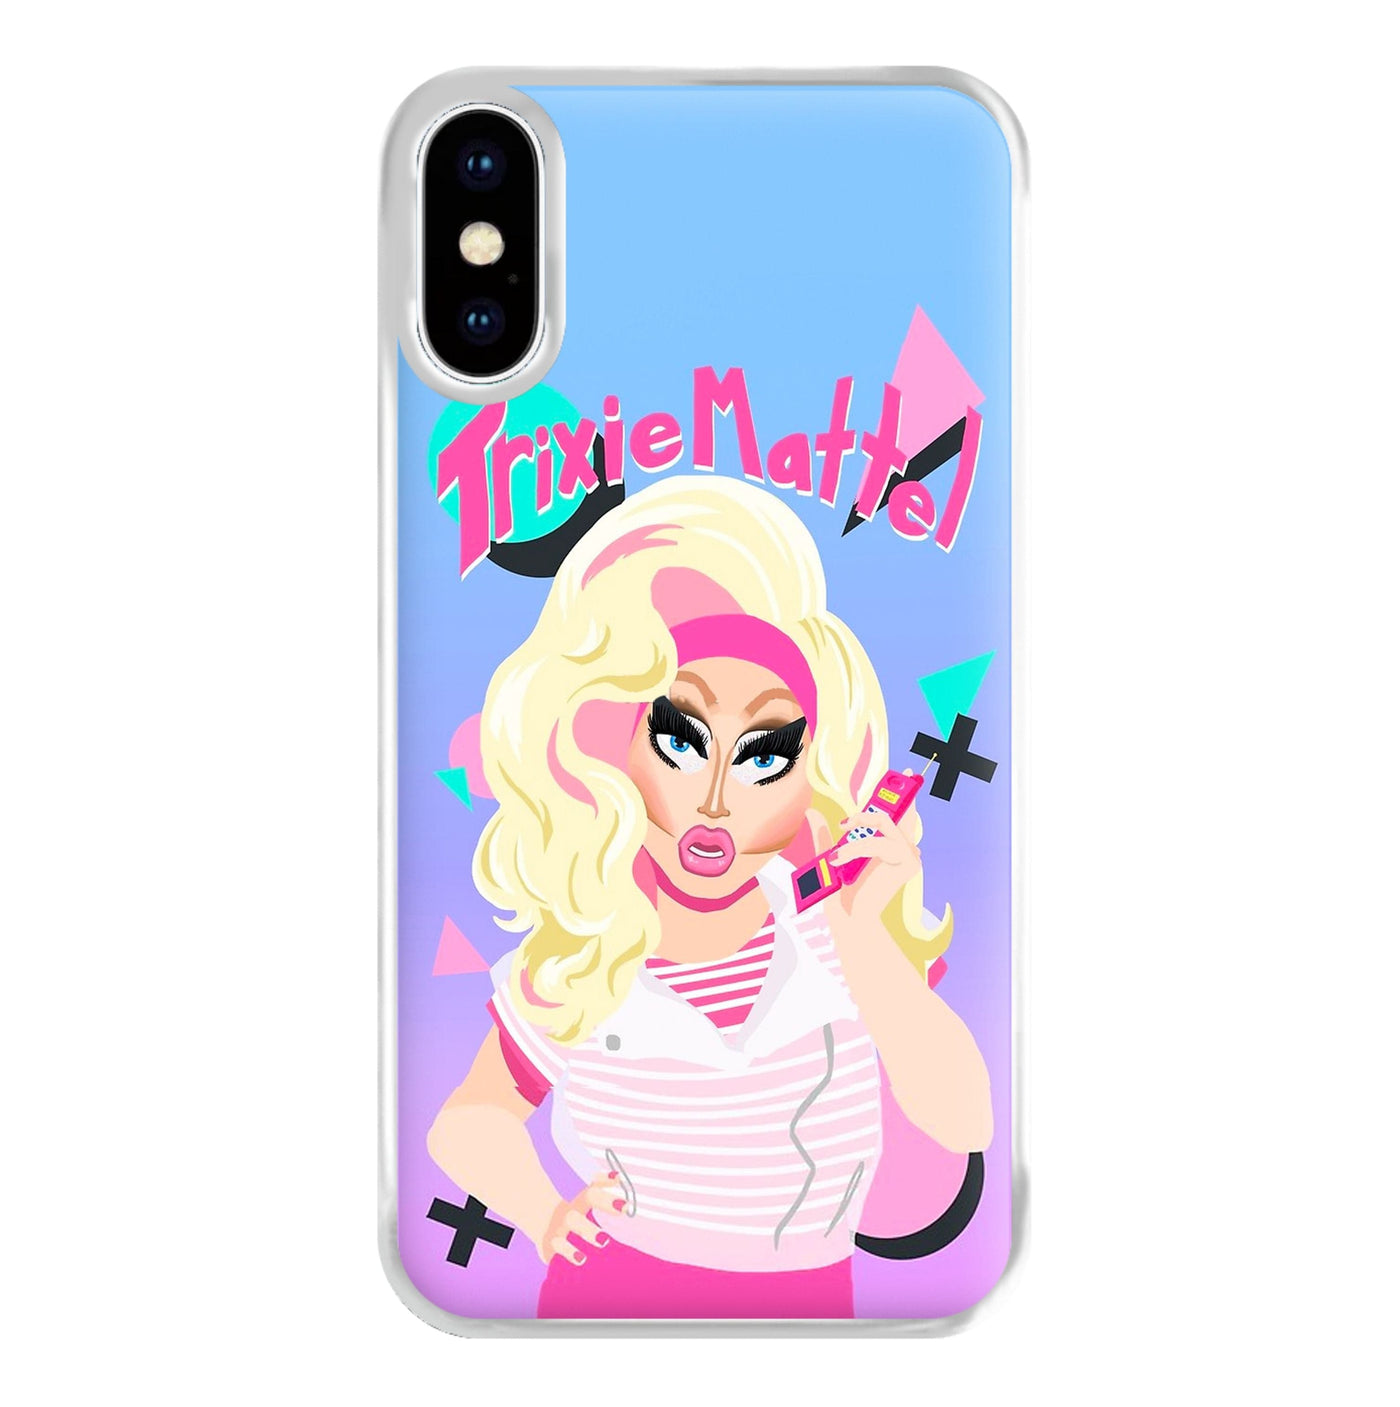 Trixie Mattel 80's Realness - RuPaul's Drag Race Phone Case